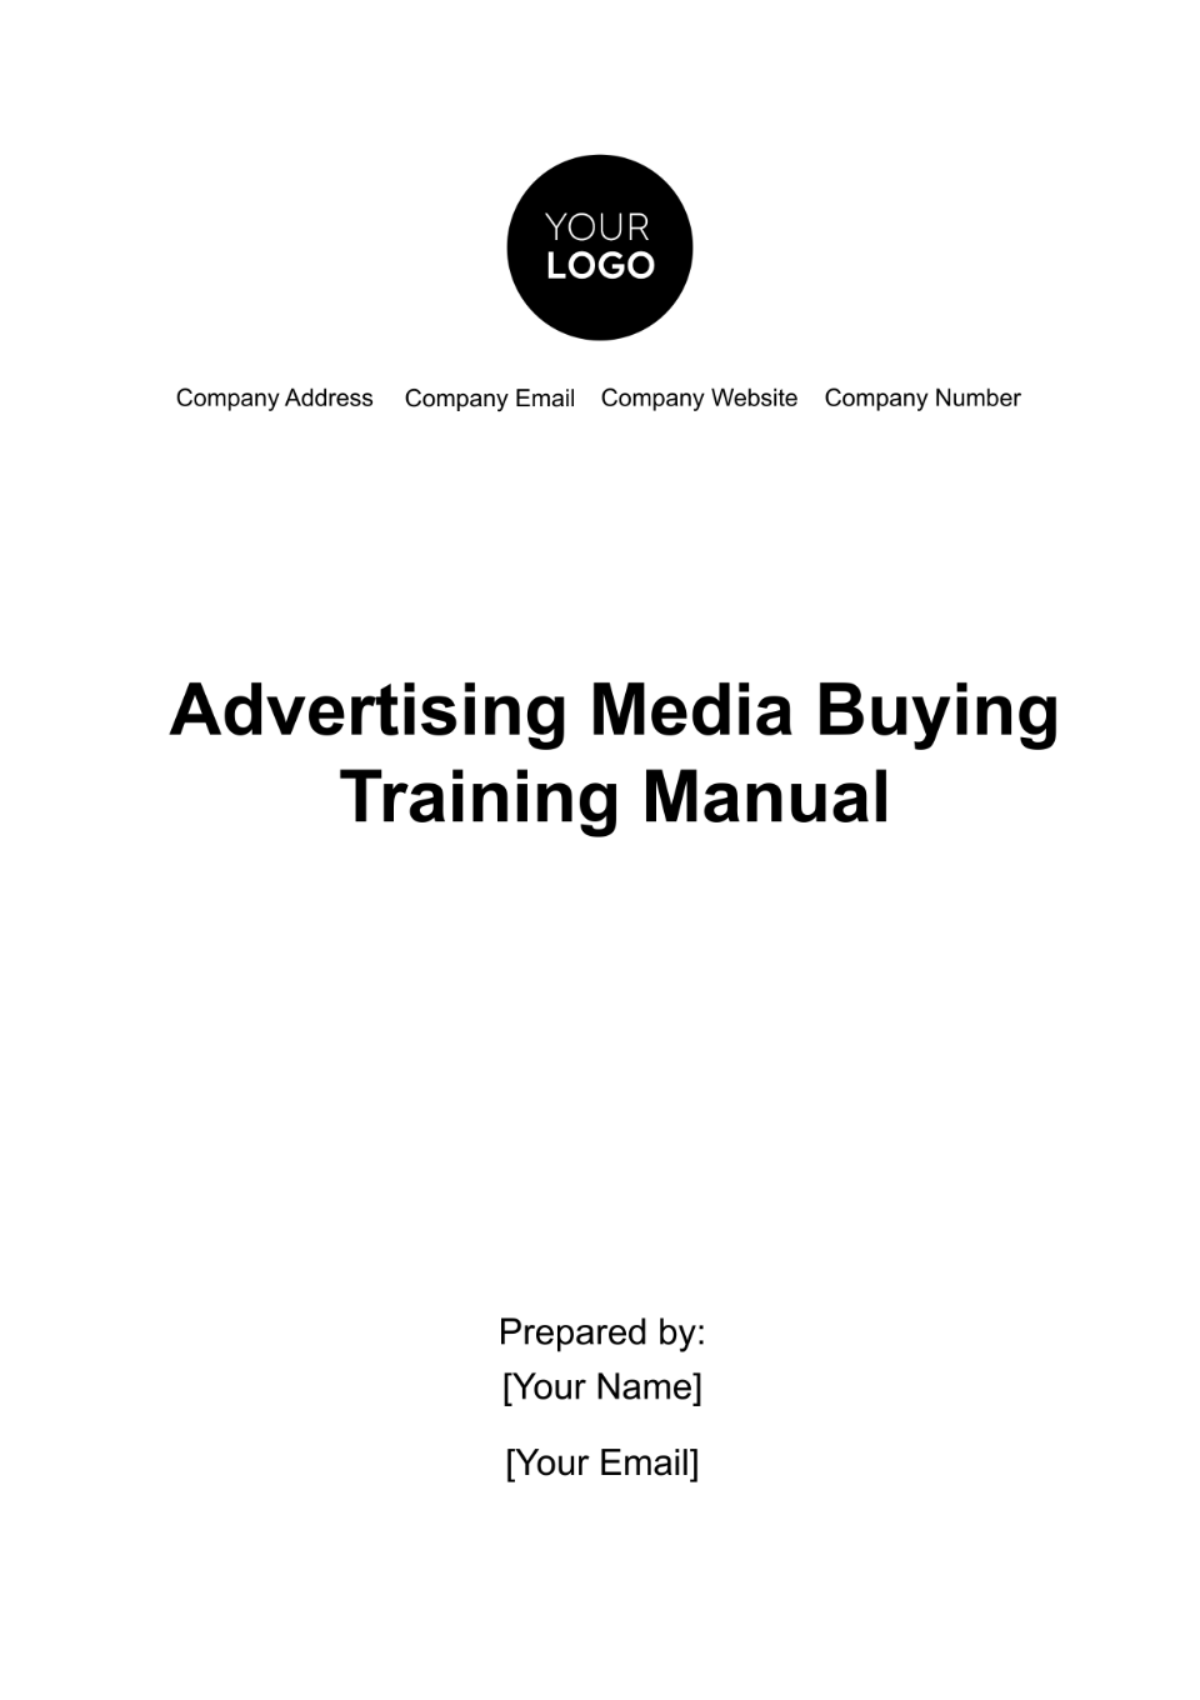 Advertising Media Buying Training Manual Template